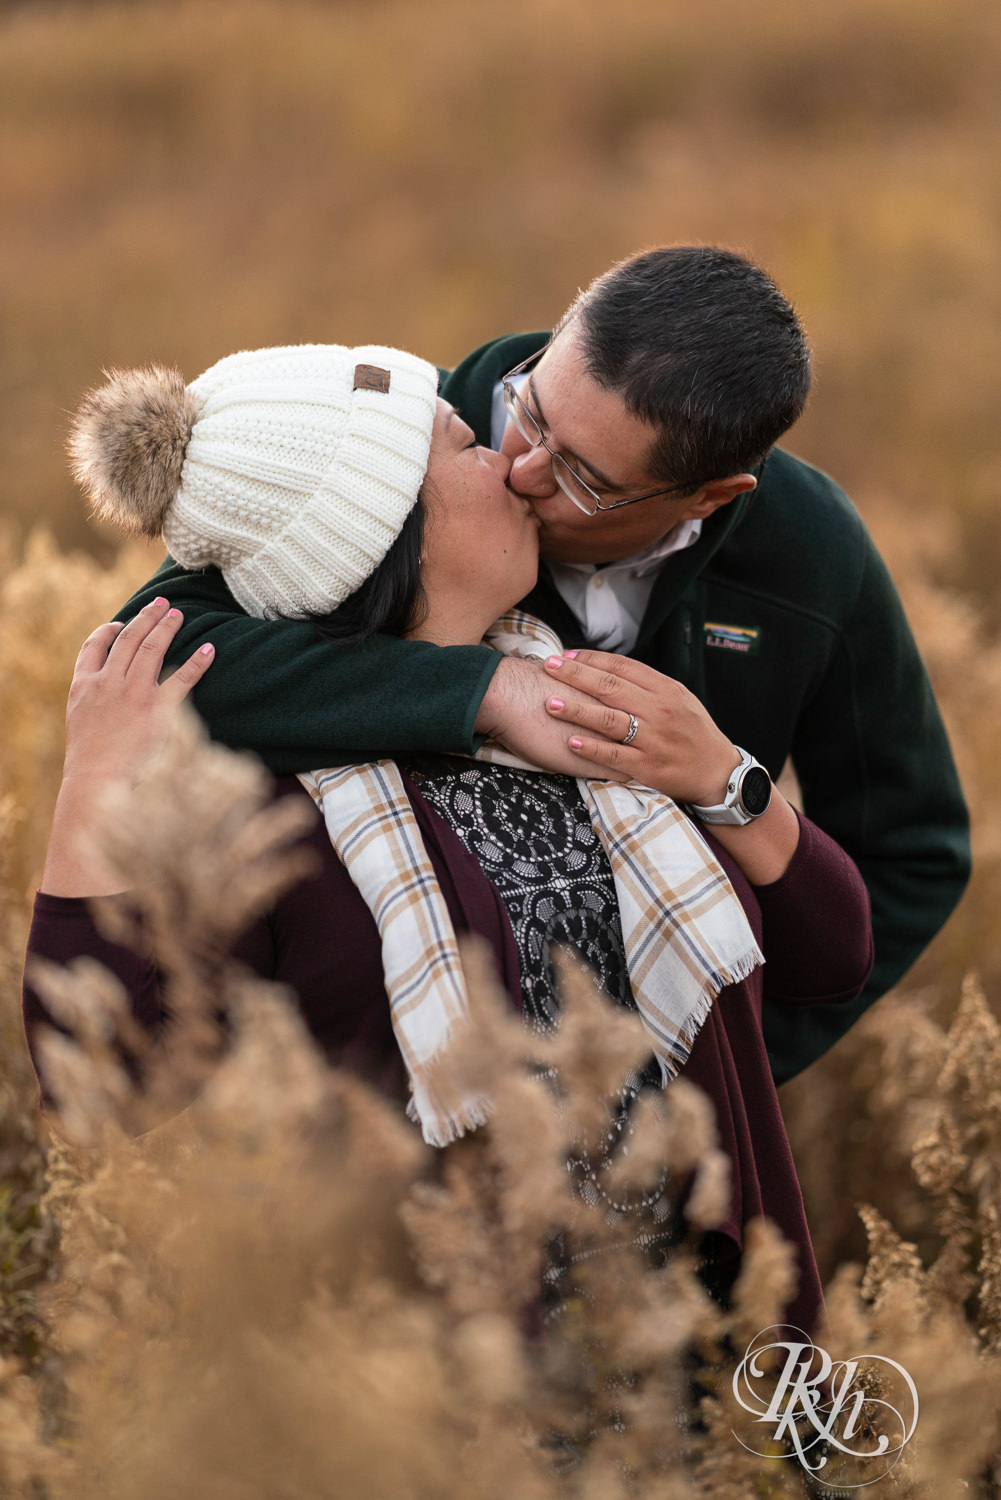 Man and Korean woman hug and kiss in field in fall colors at Lebanon Hills Regional Park in Eagan, Minnesota.